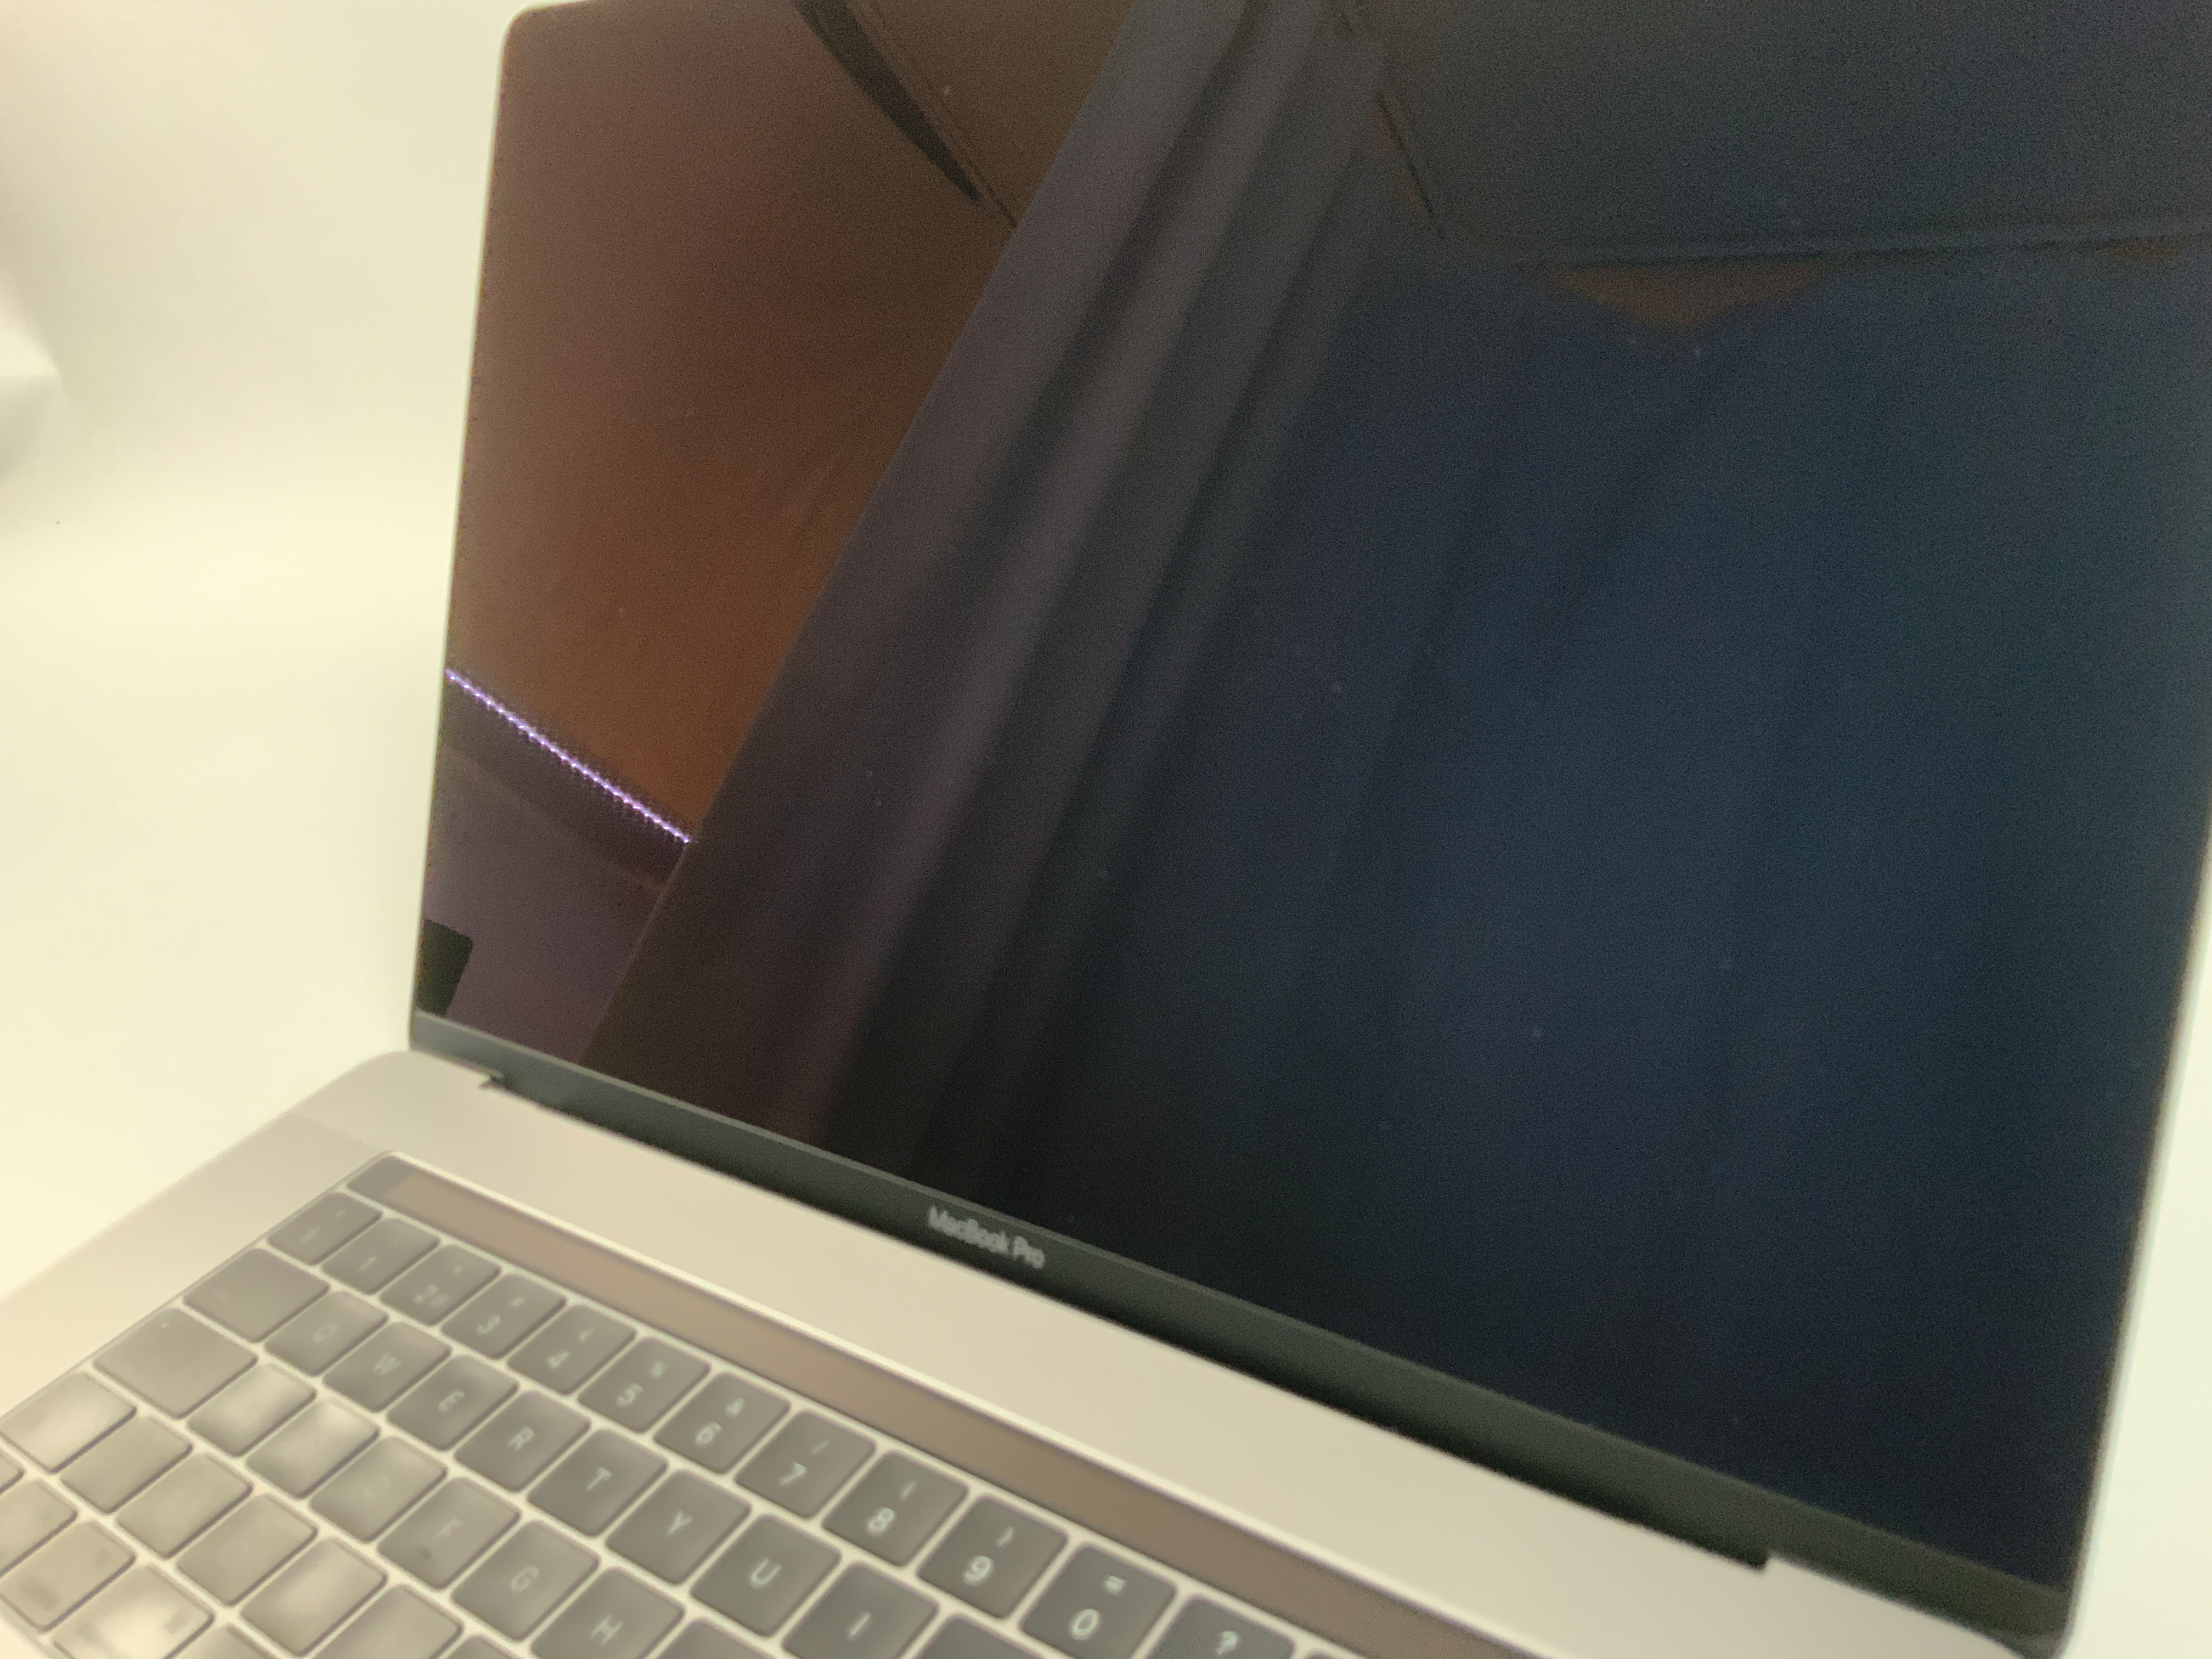 MacBook Pro 15" Touch Bar Late 2016 (Intel Quad-Core i7 2.6 GHz 16 GB RAM 256 GB SSD), Space Gray, Intel Quad-Core i7 2.6 GHz, 16 GB RAM, 256 GB SSD, Afbeelding 3